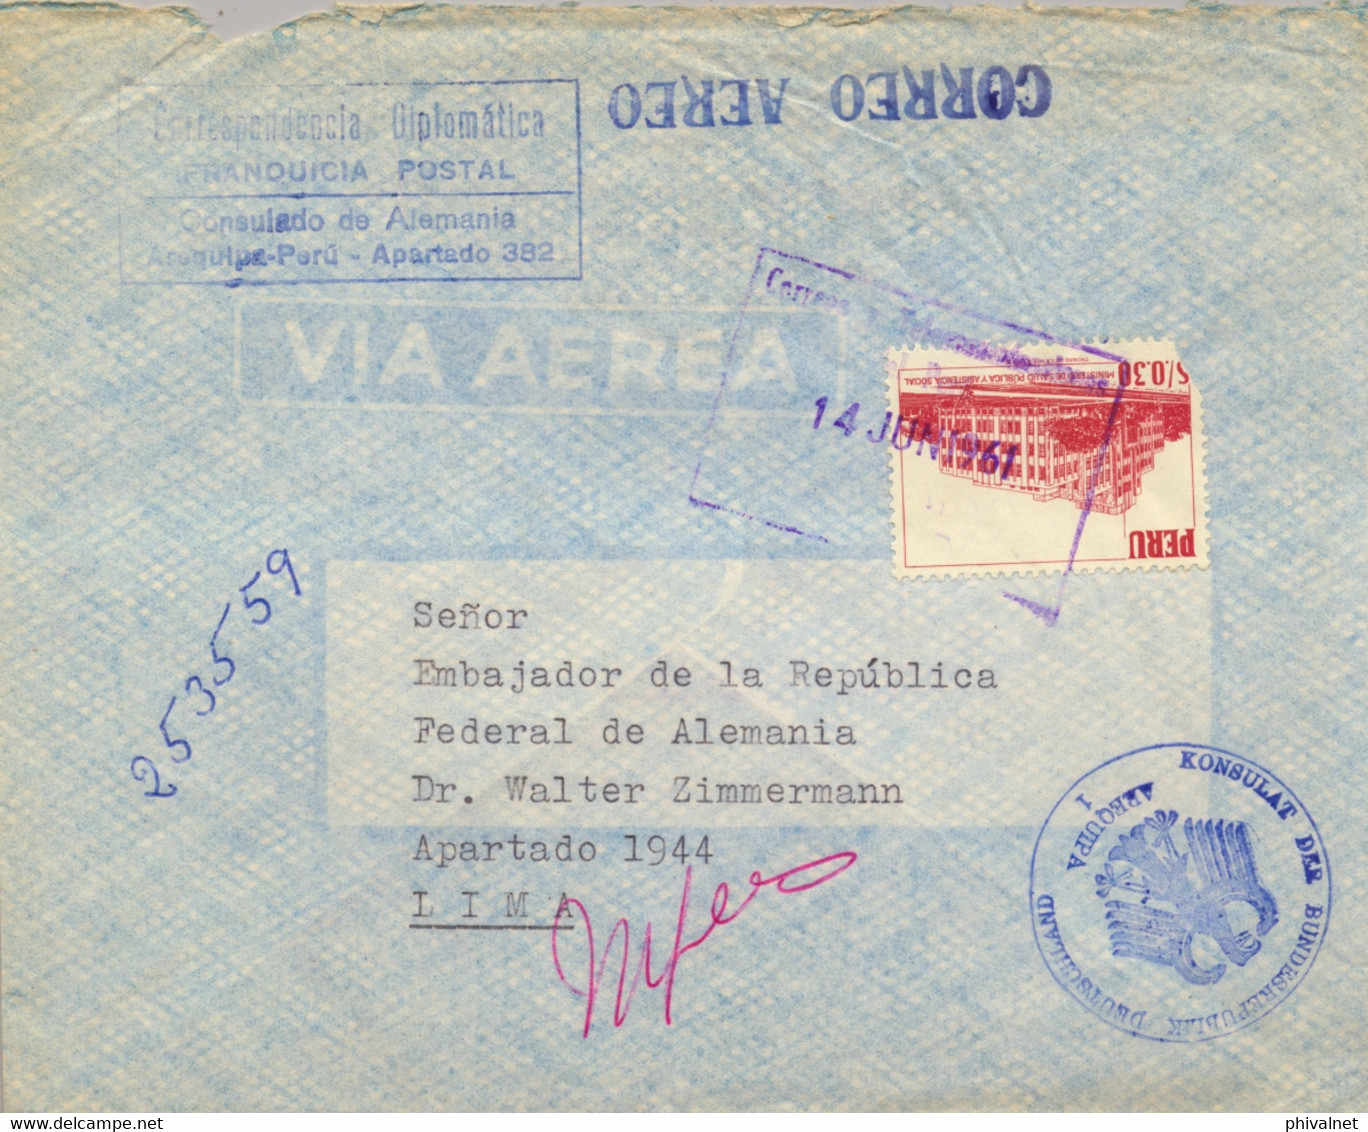 1961 PERÚ , SOBRE CIRCULADO ENTRE AREQUIPA Y LIMA , CORREO CONSULAR , CORRESPONDENCIA DIPLOMÁTICA / FRANQUICIA POSTAL - Peru